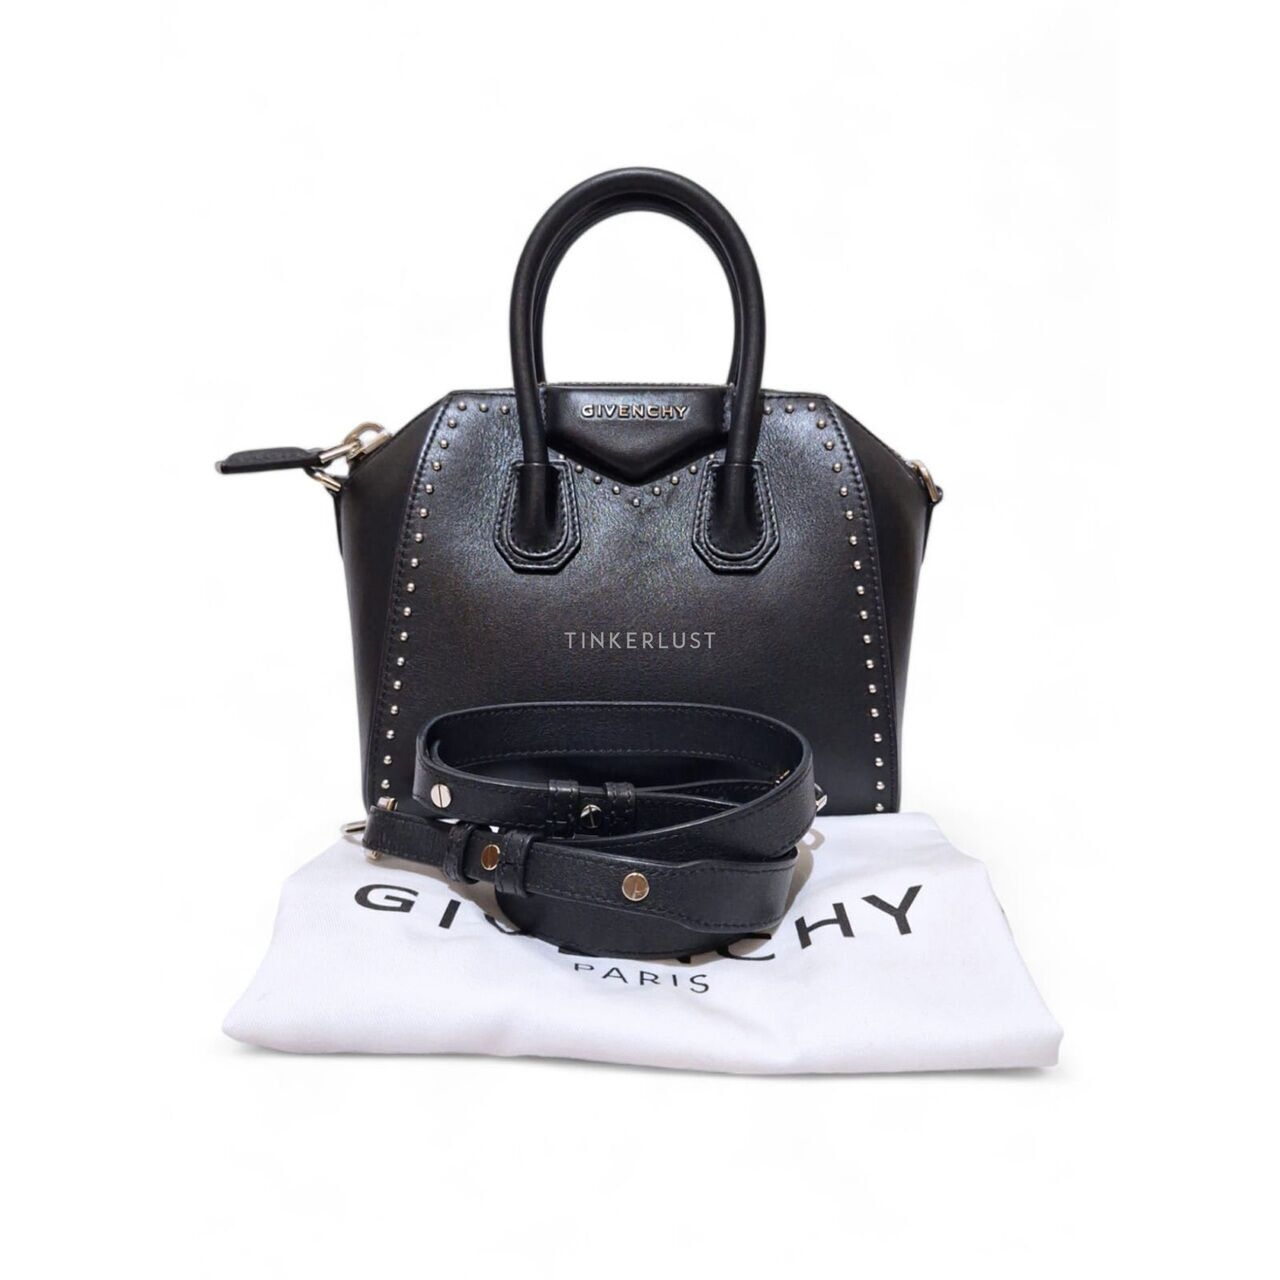 Givenchy Antigona Black Leather Satchel